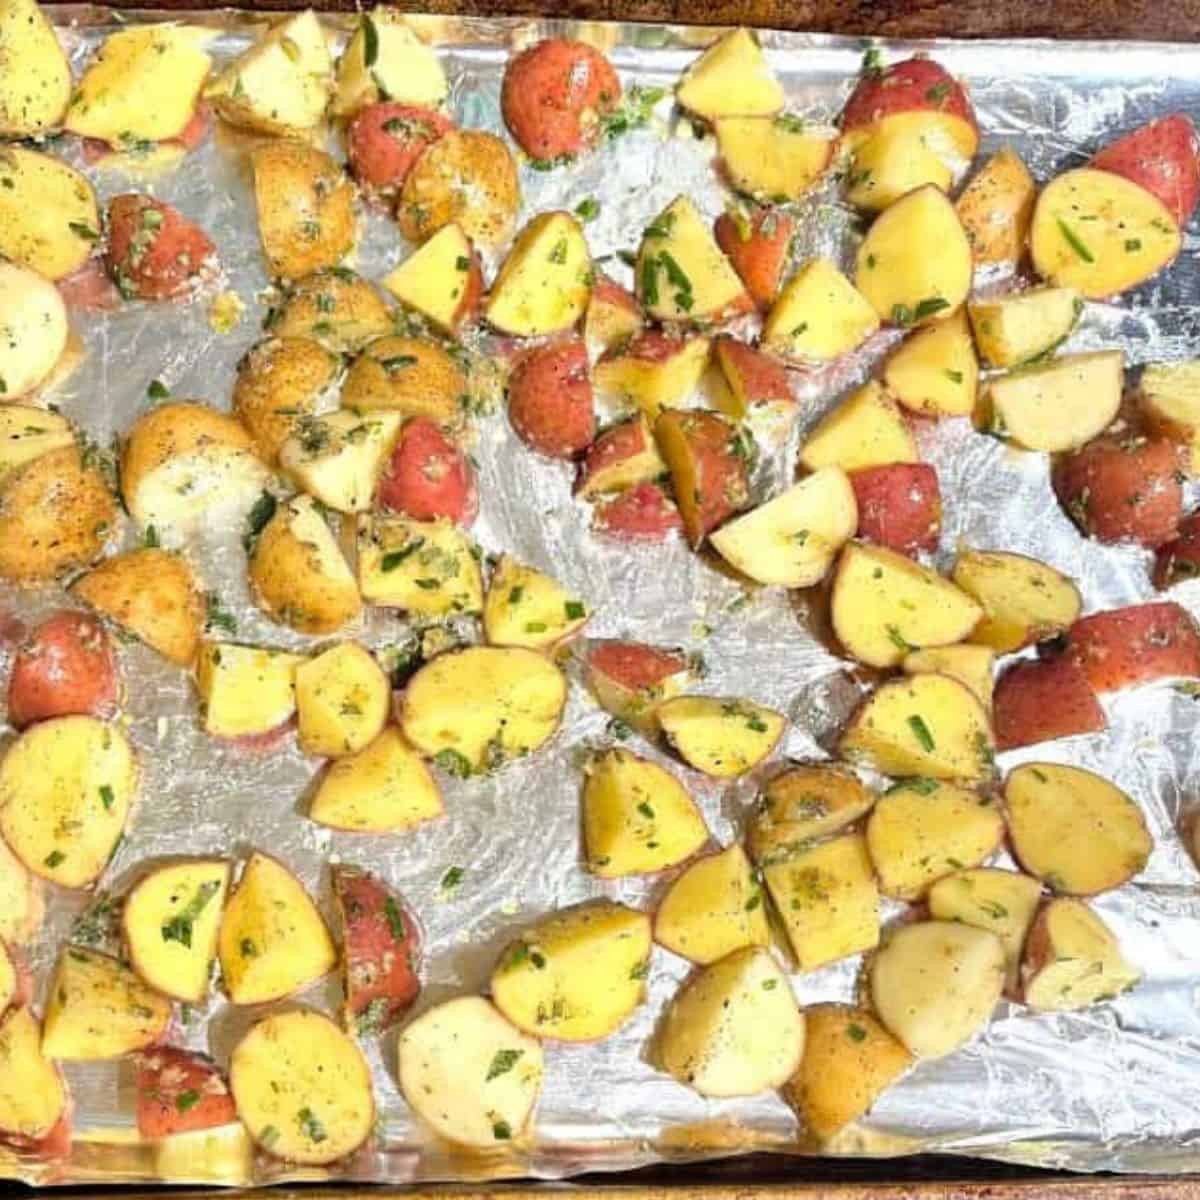 Potatoes mixed with rosemary marinade ingredients on baking sheet.